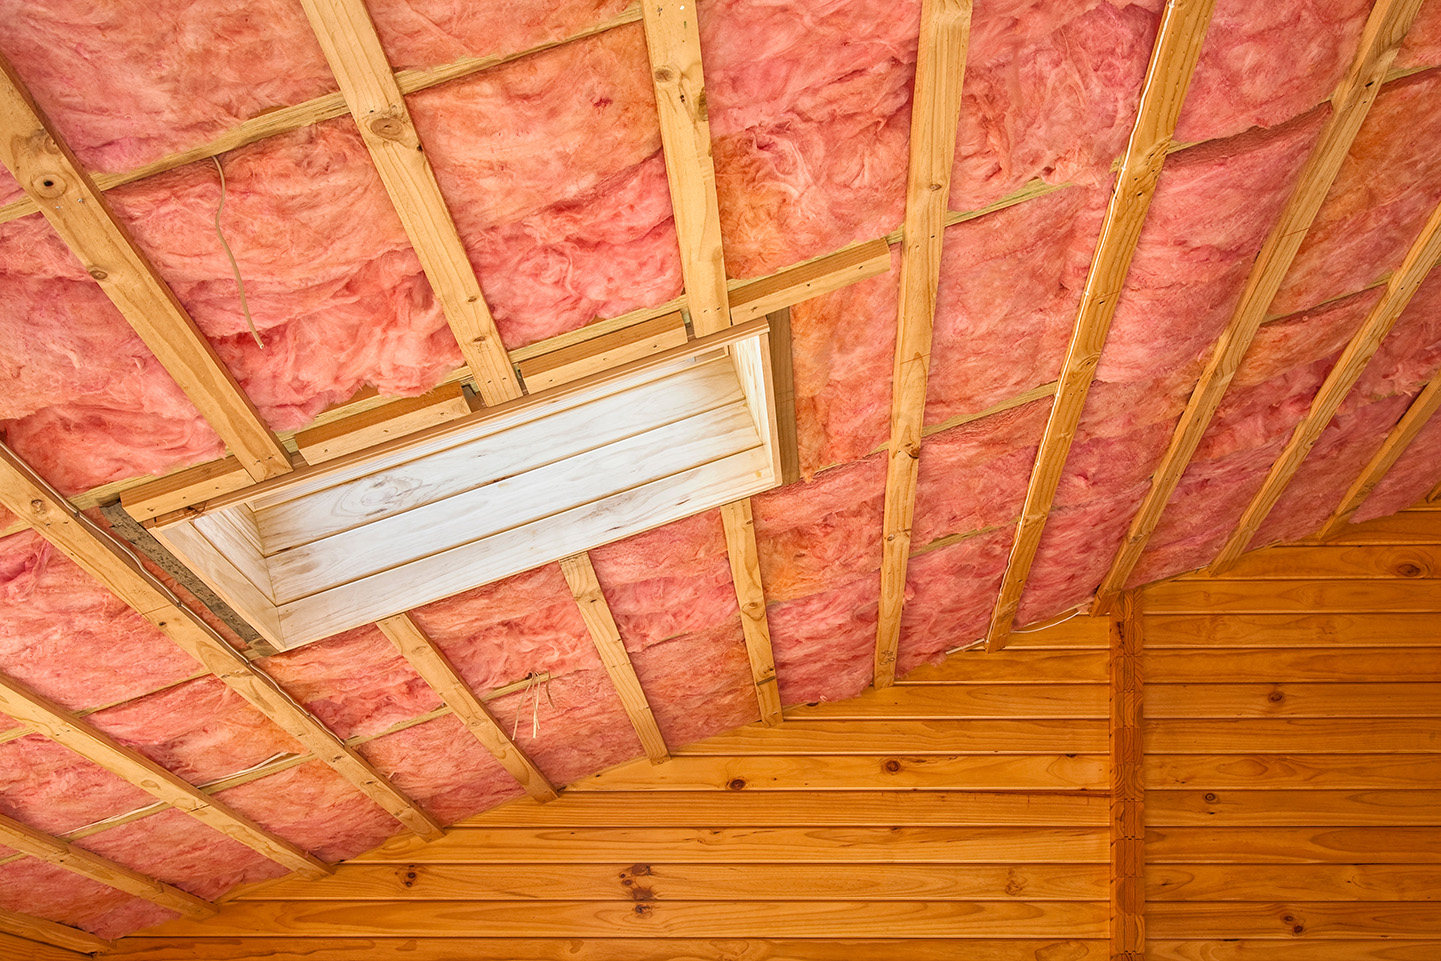 fiberglass insulation batts in an attic